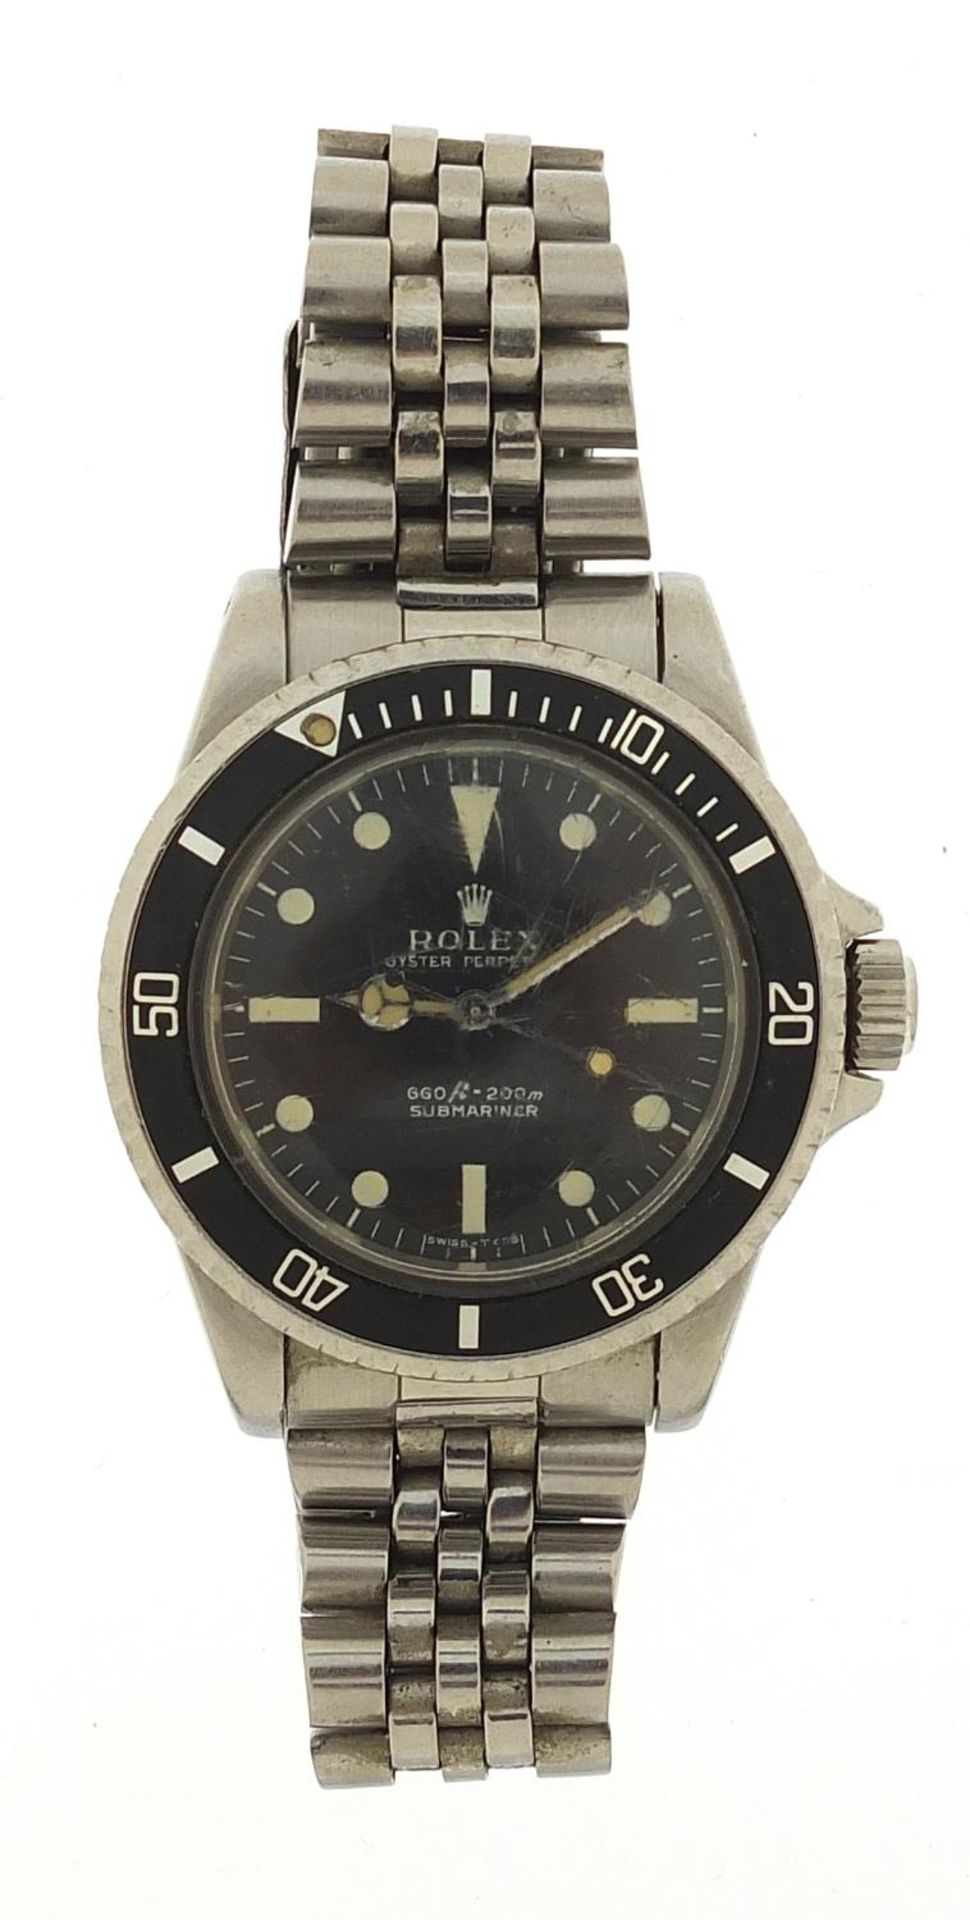 Rolex gentlemen's Submariner automatic wristwatch, ref 5513, serial number 1005684, 40mm in diameter - Image 2 of 9